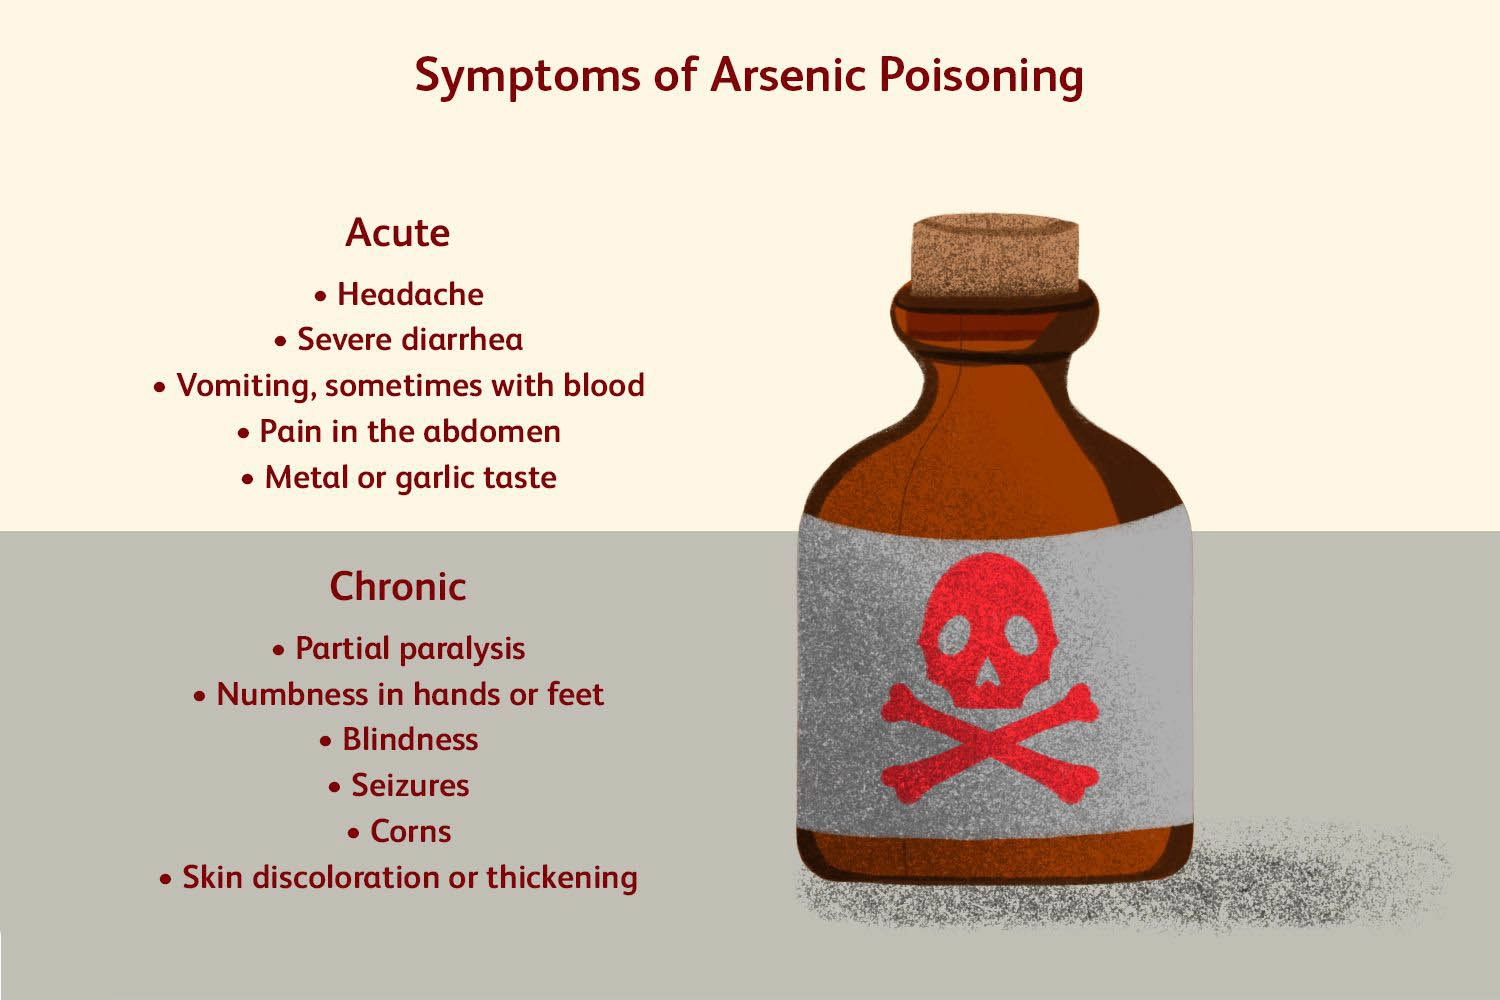 Symptoms of arsenic poisoning